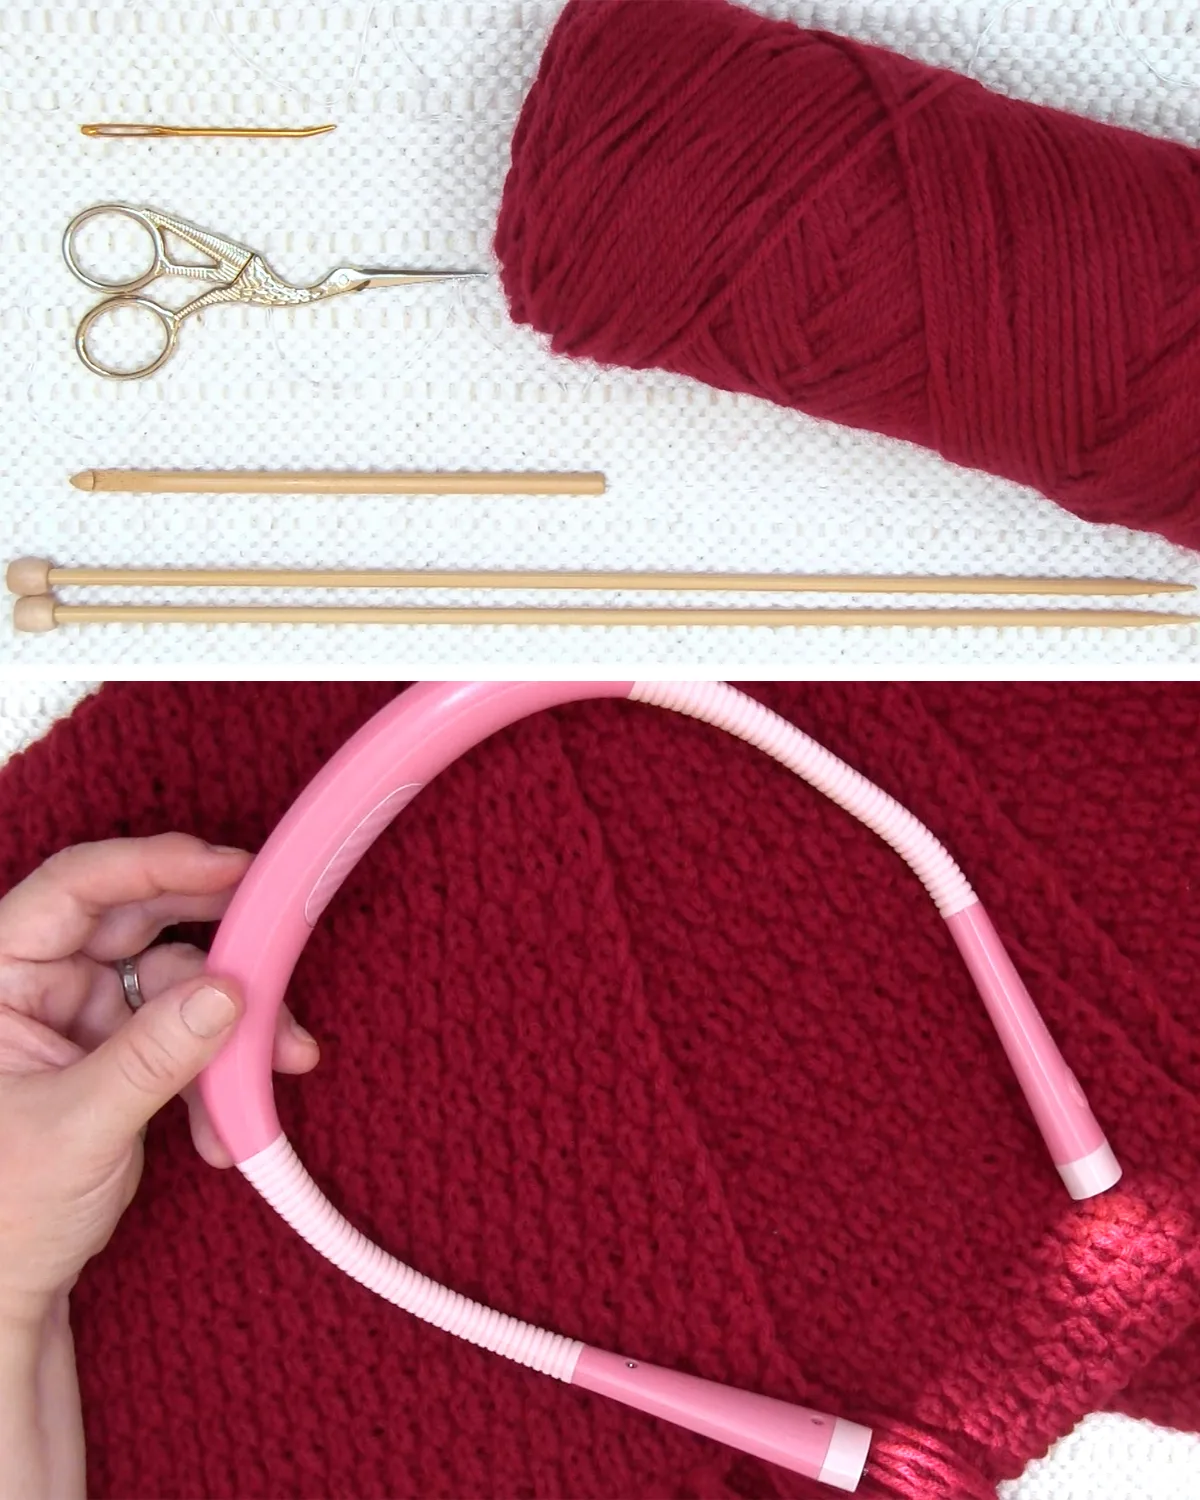 Knitting supplies of burgundy worsted yarn, knitting needles, crochet hook, scissors, tapestry needle, and reading light.